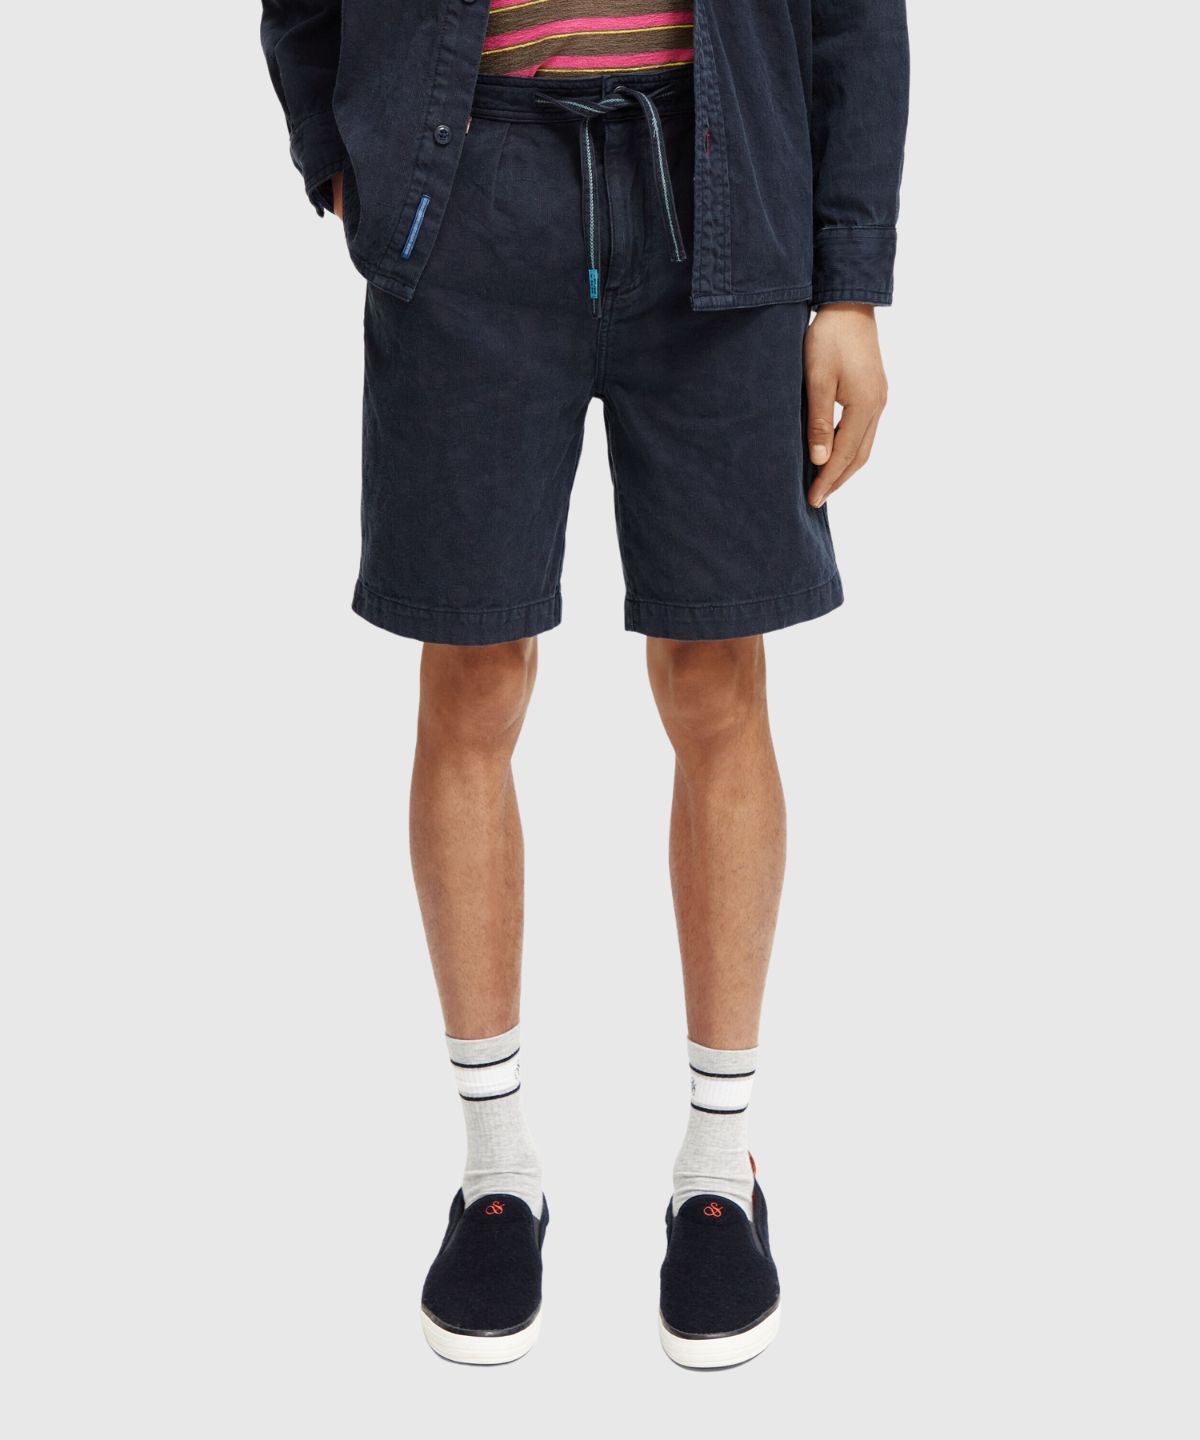 Fave – jacquard garment-dyed bermuda shorts